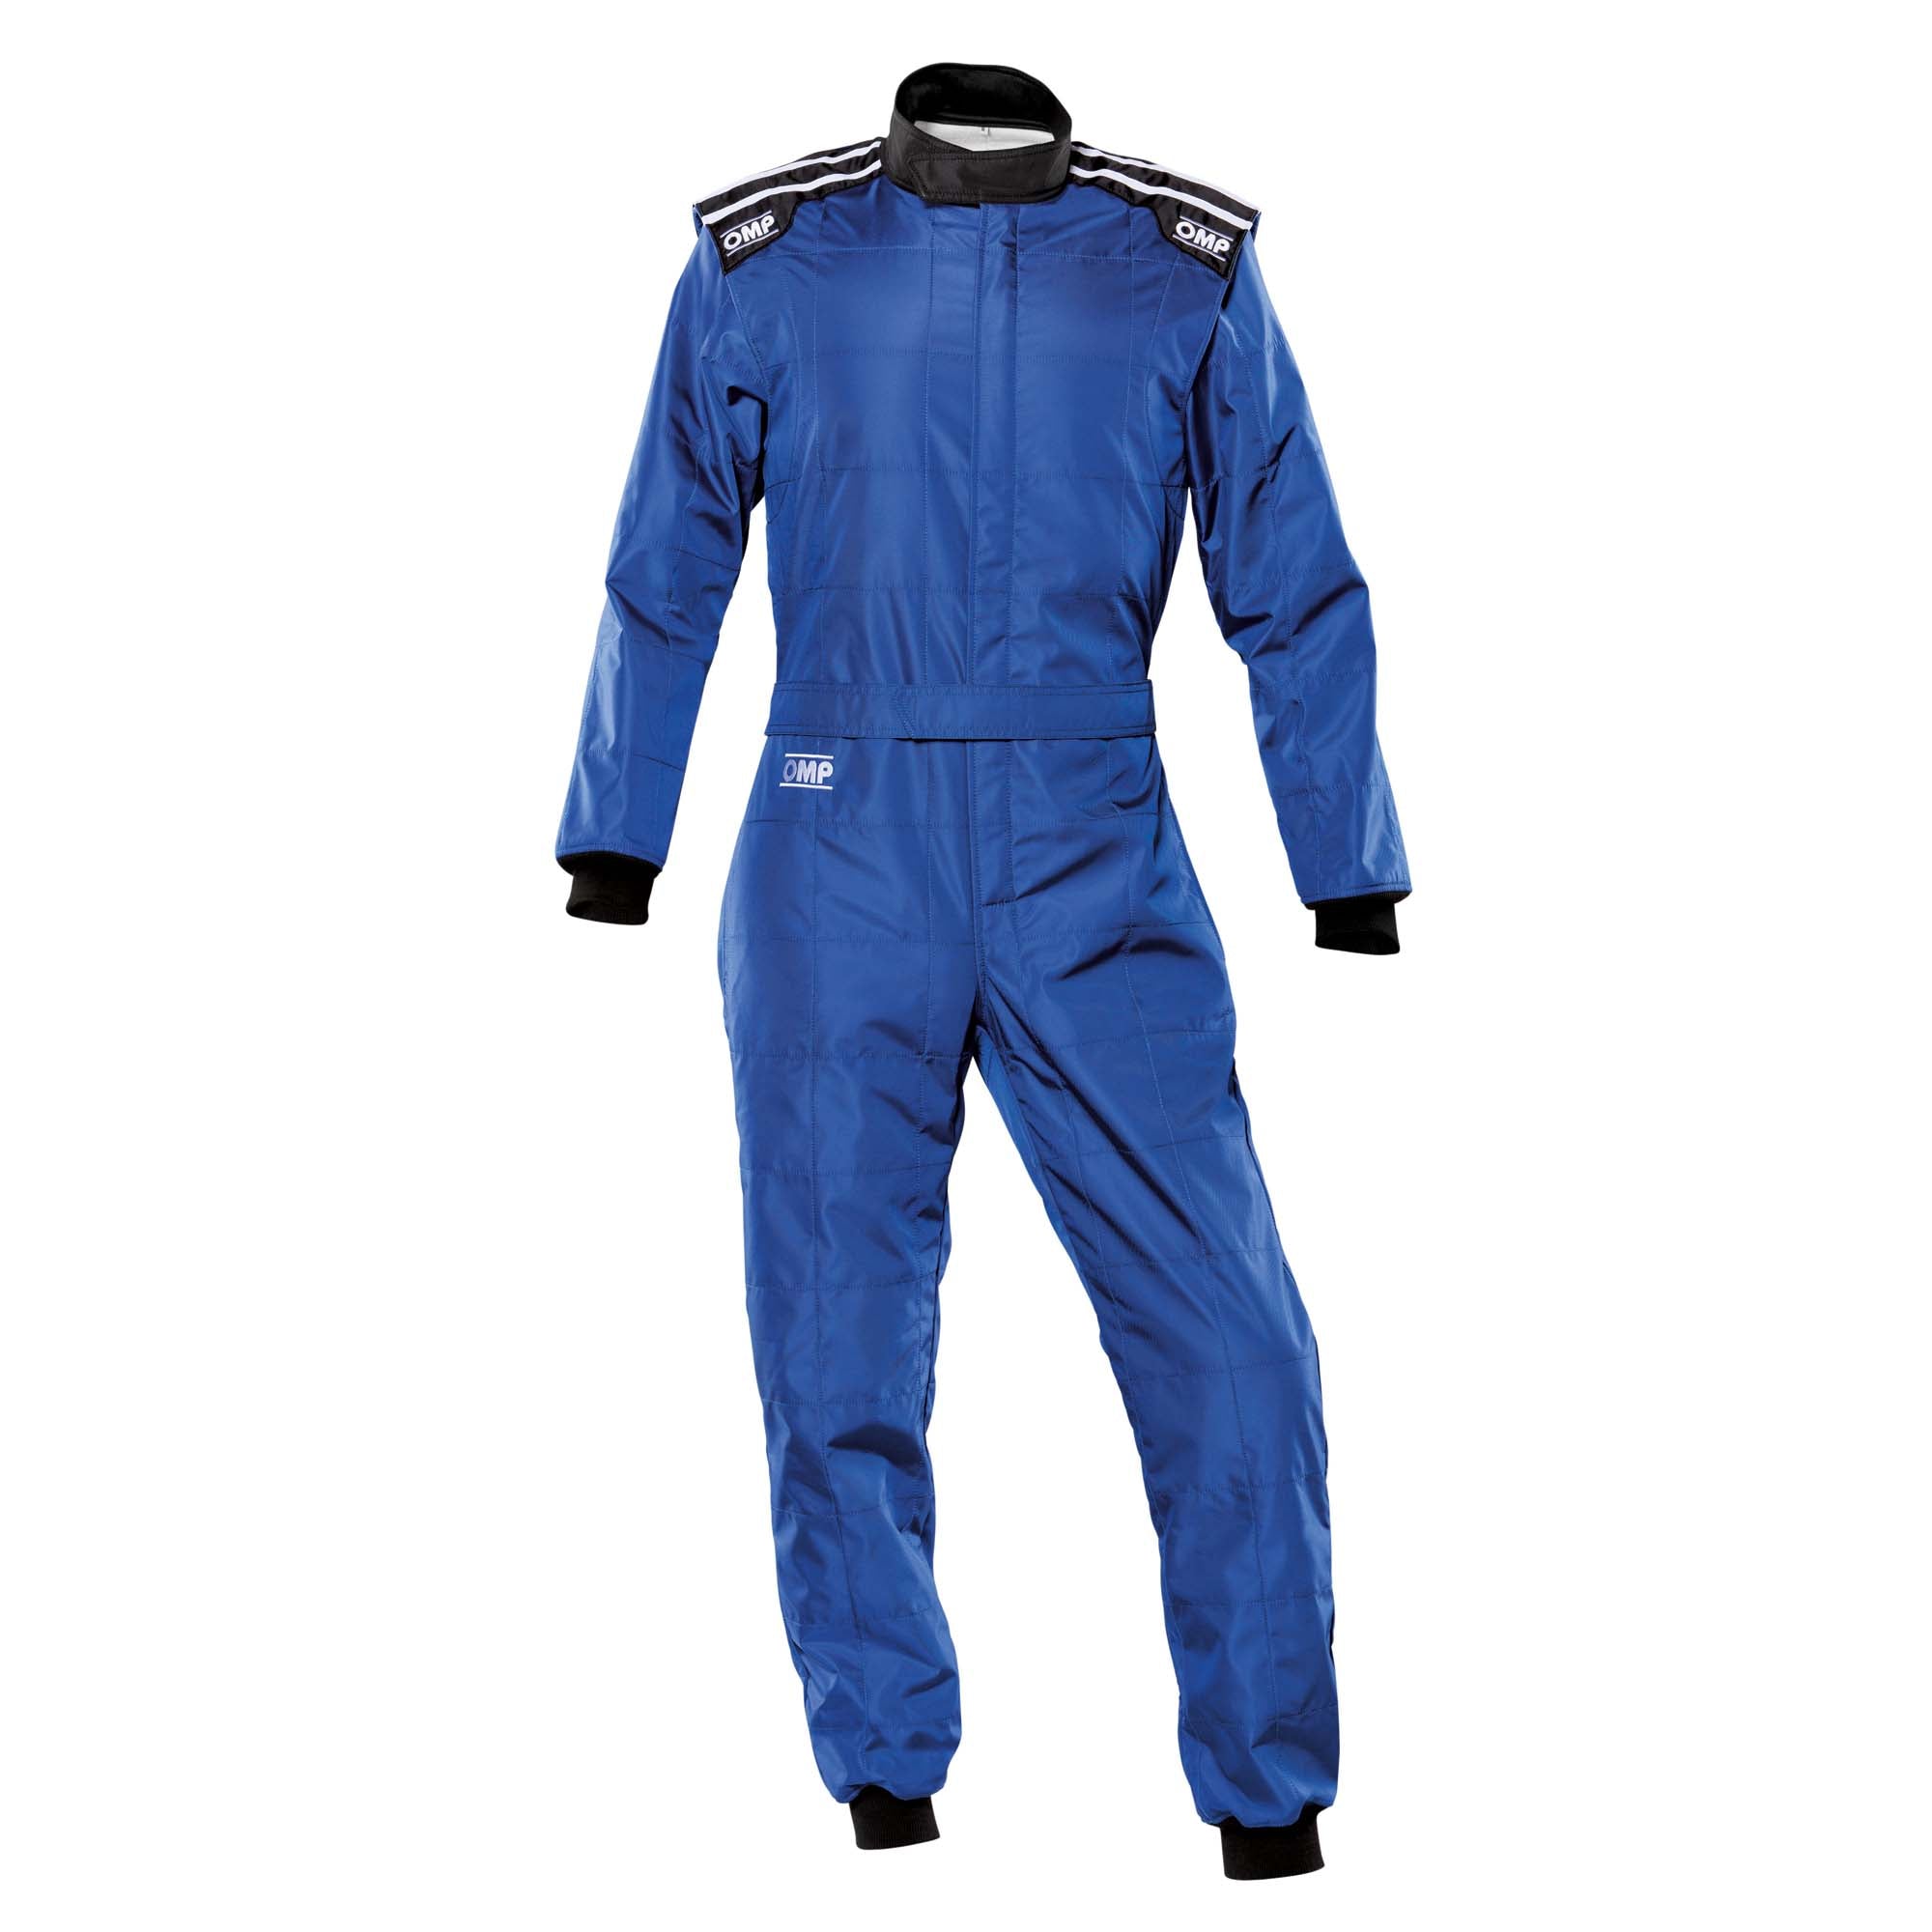 OMP KS-4 Kart Racing Suit - Blue